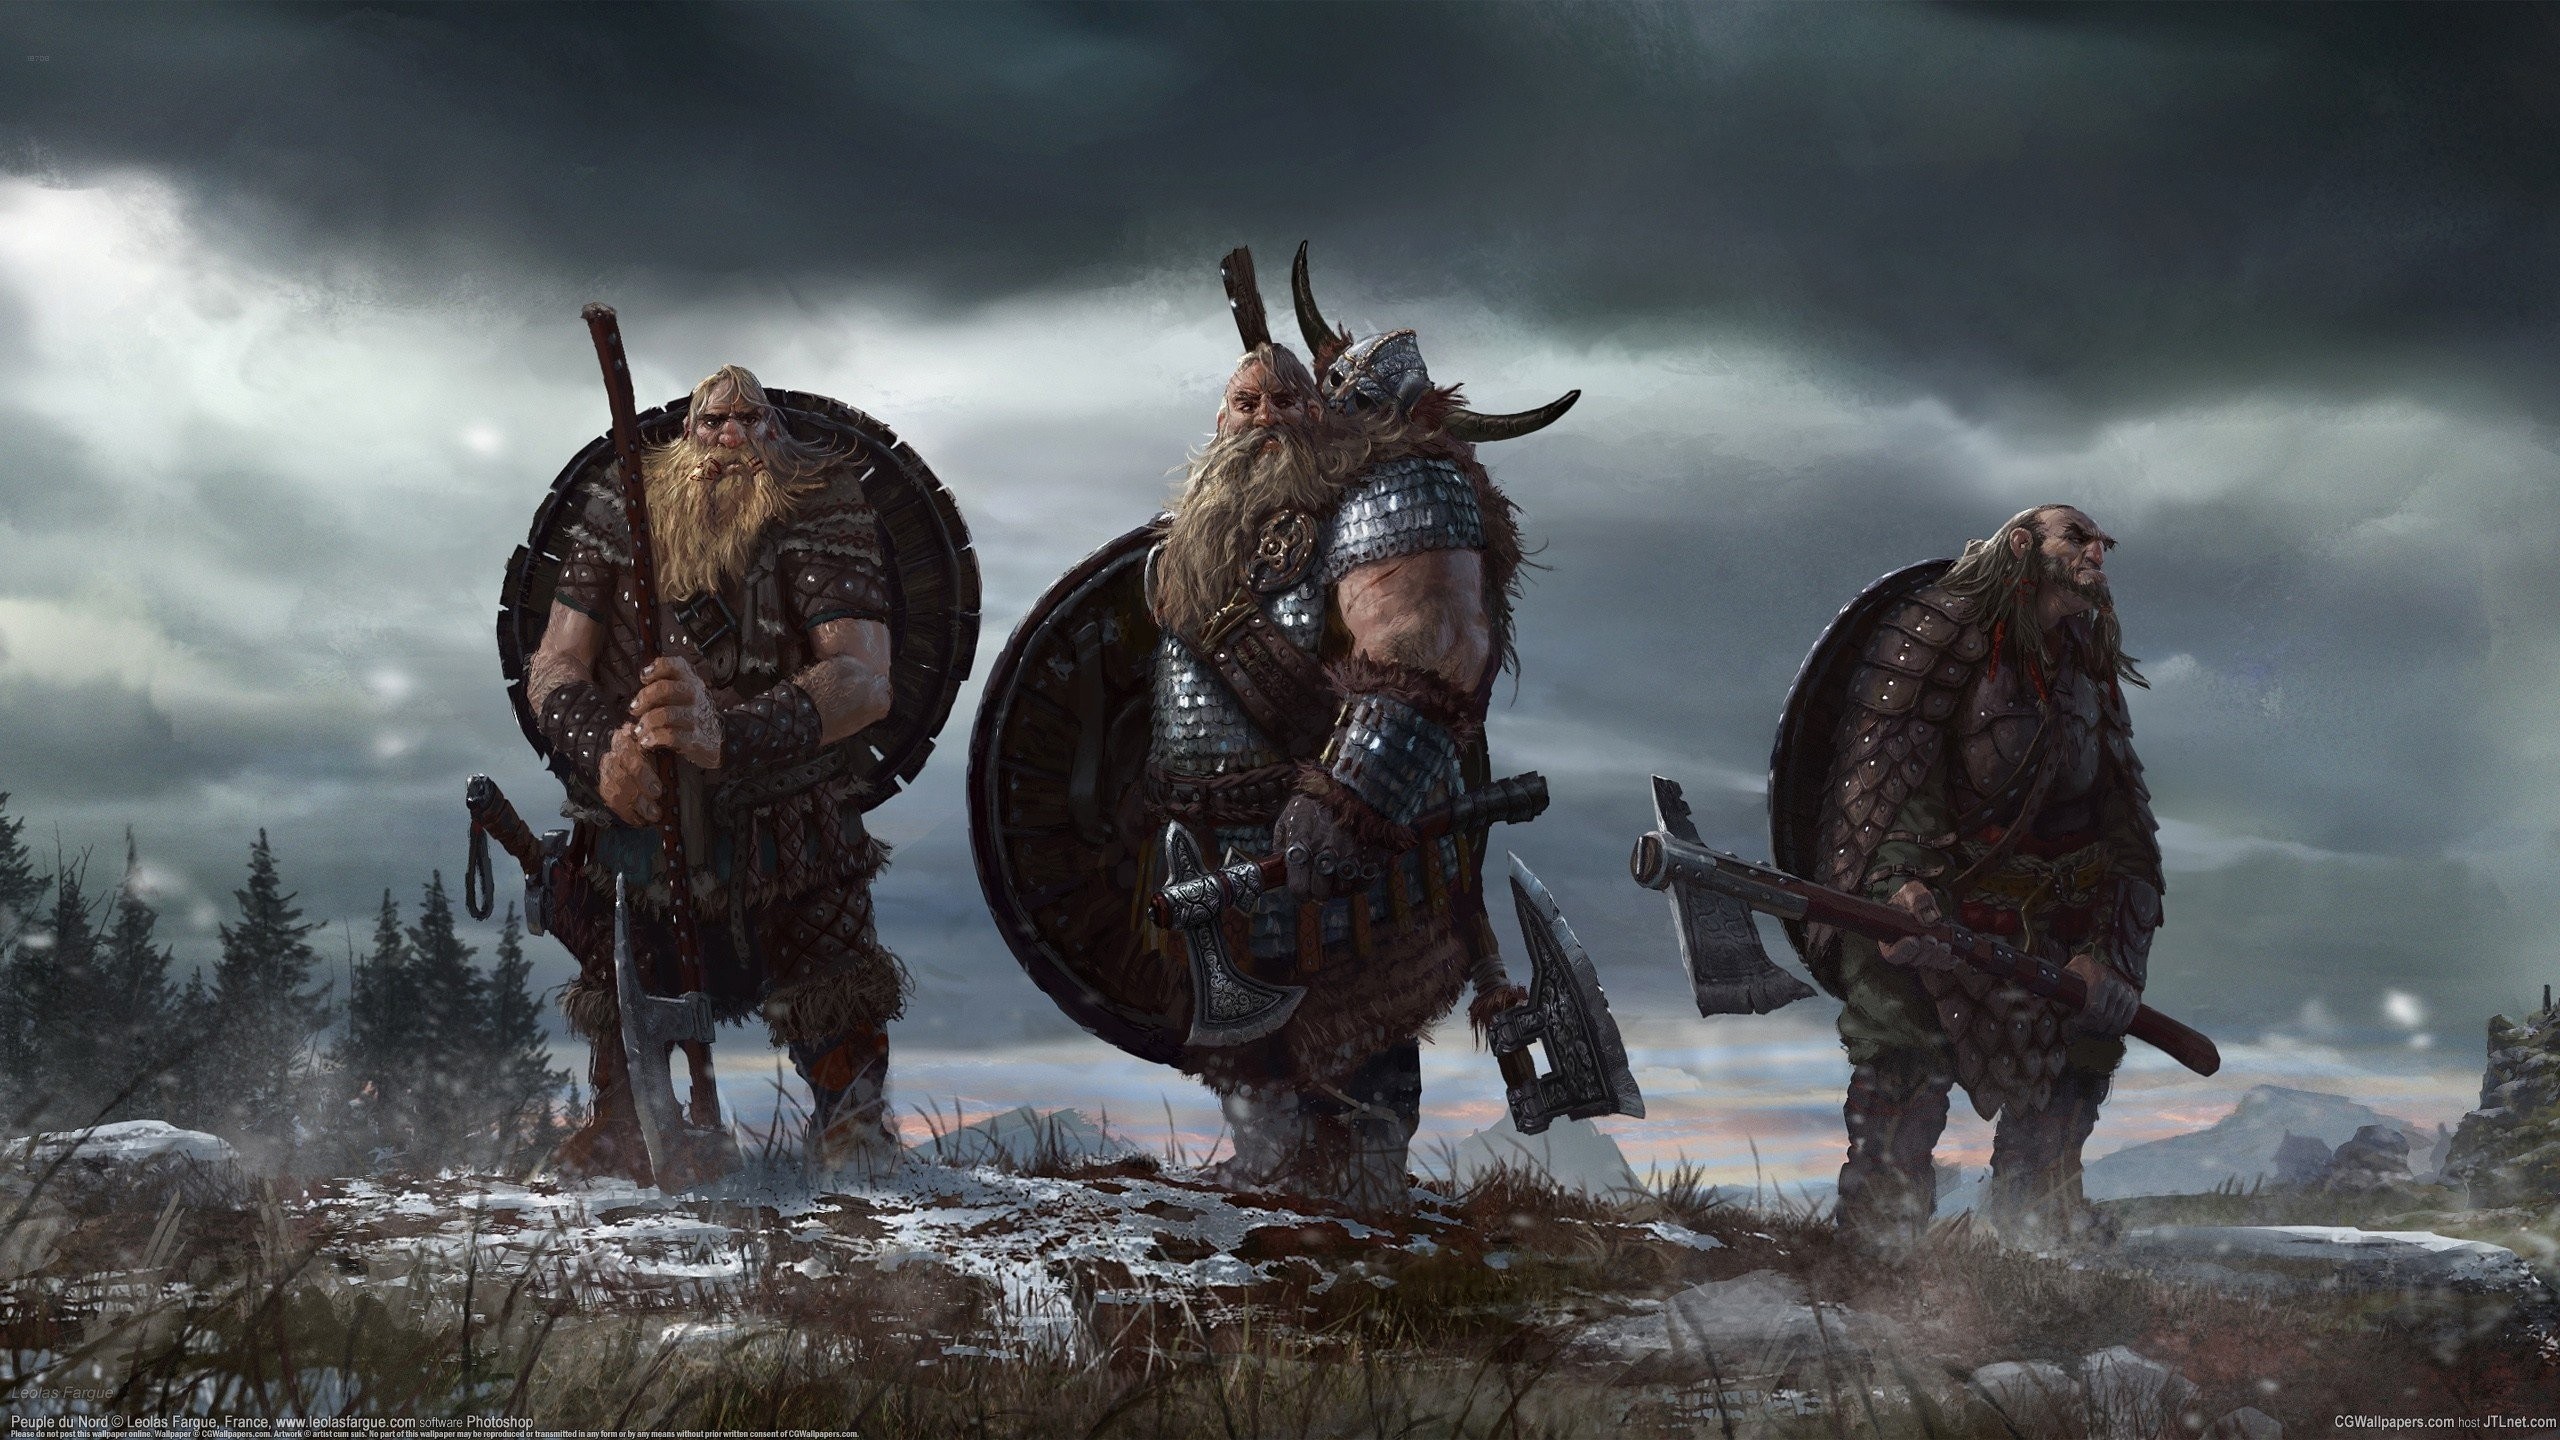 General 2560x1440 Vikings Nordic warrior shield artwork concept art axes fantasy art dwarf digital art watermarked